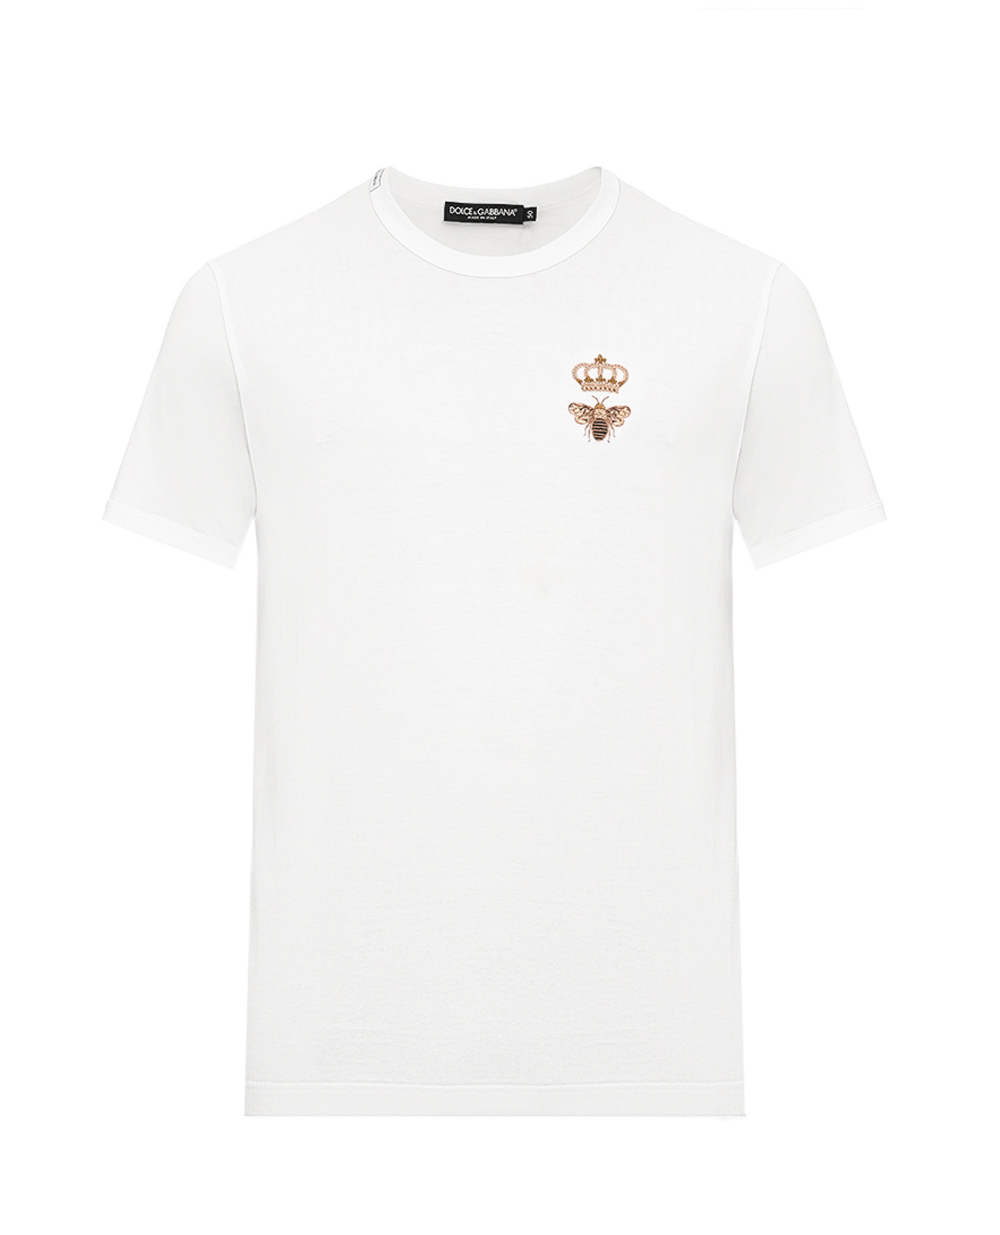 Футболка Dolce&Gabbana G8PV1Z-G7WUQ, белый цвет • Купить в интернет-магазине Kameron